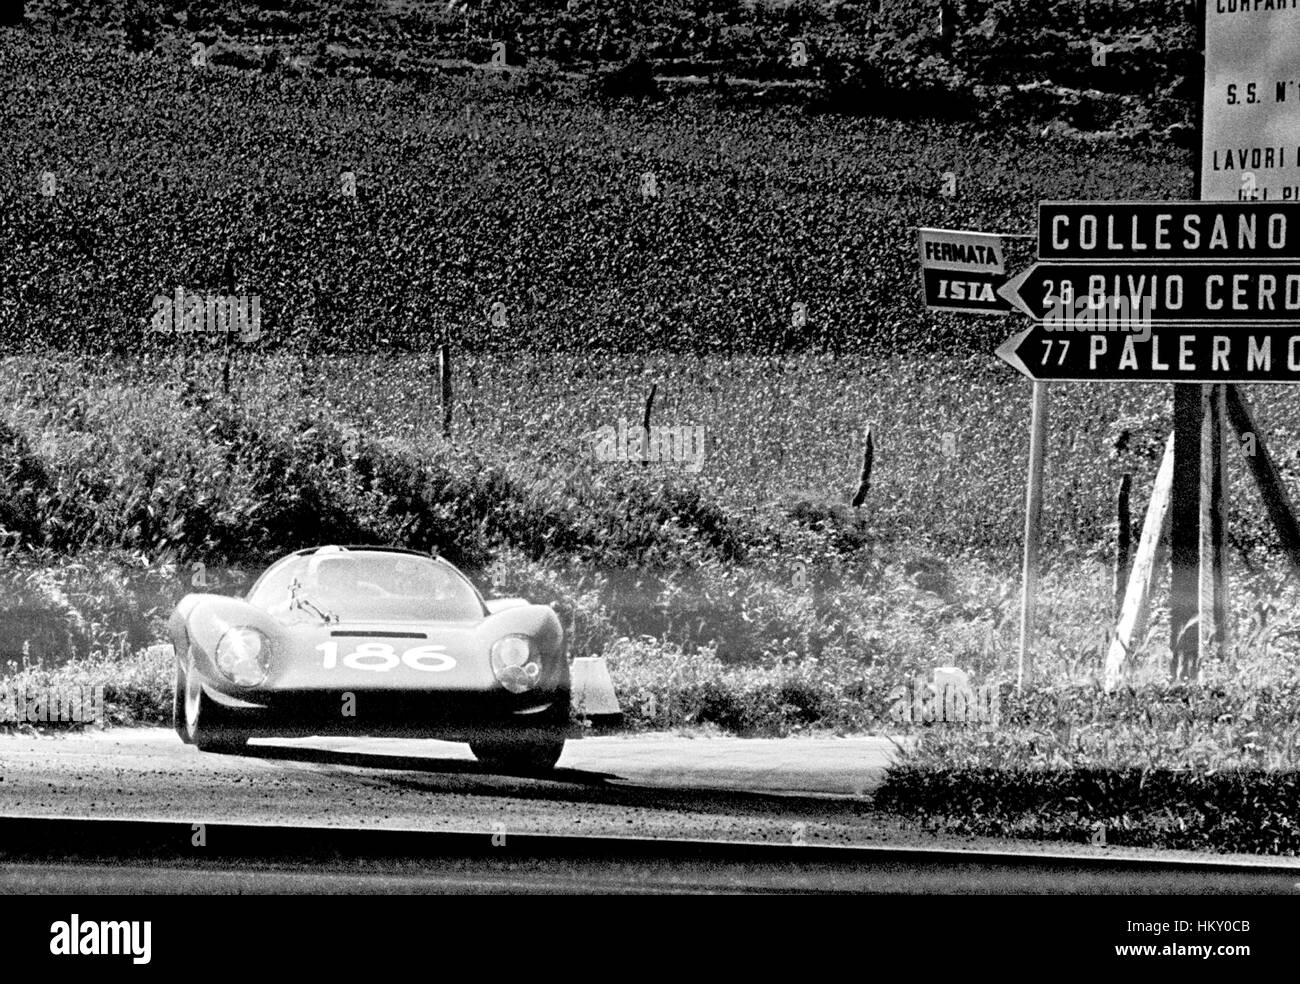 1967 Ferdinando Latteri Italian Ferrari Dino 206S Targa Florio dnf. GG Stock Photo